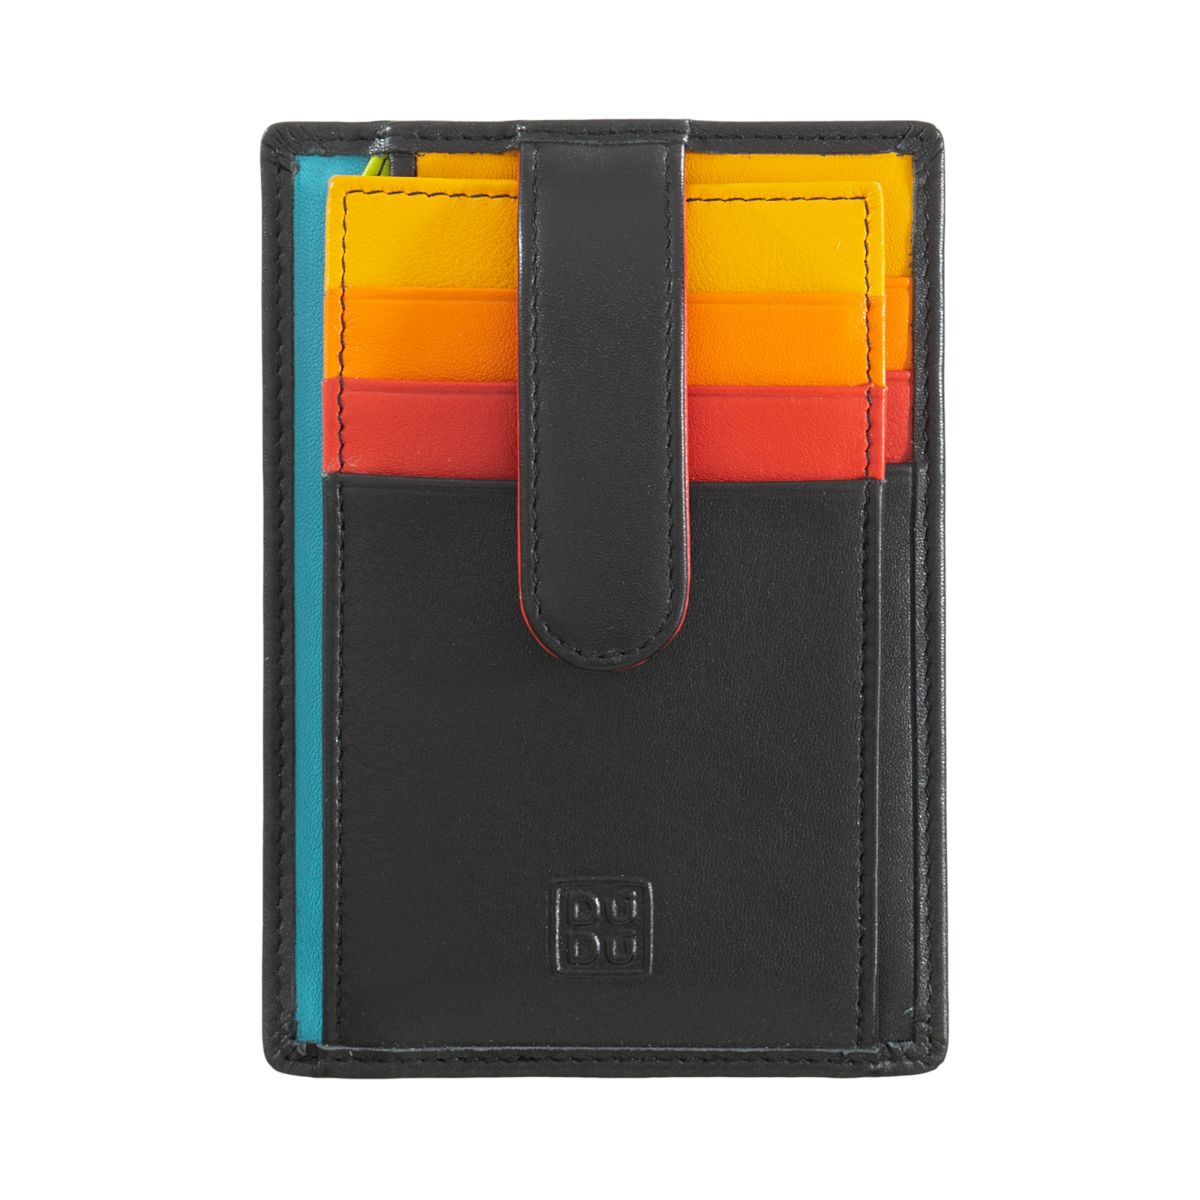 Compact multi color credit card holder wallet - Black